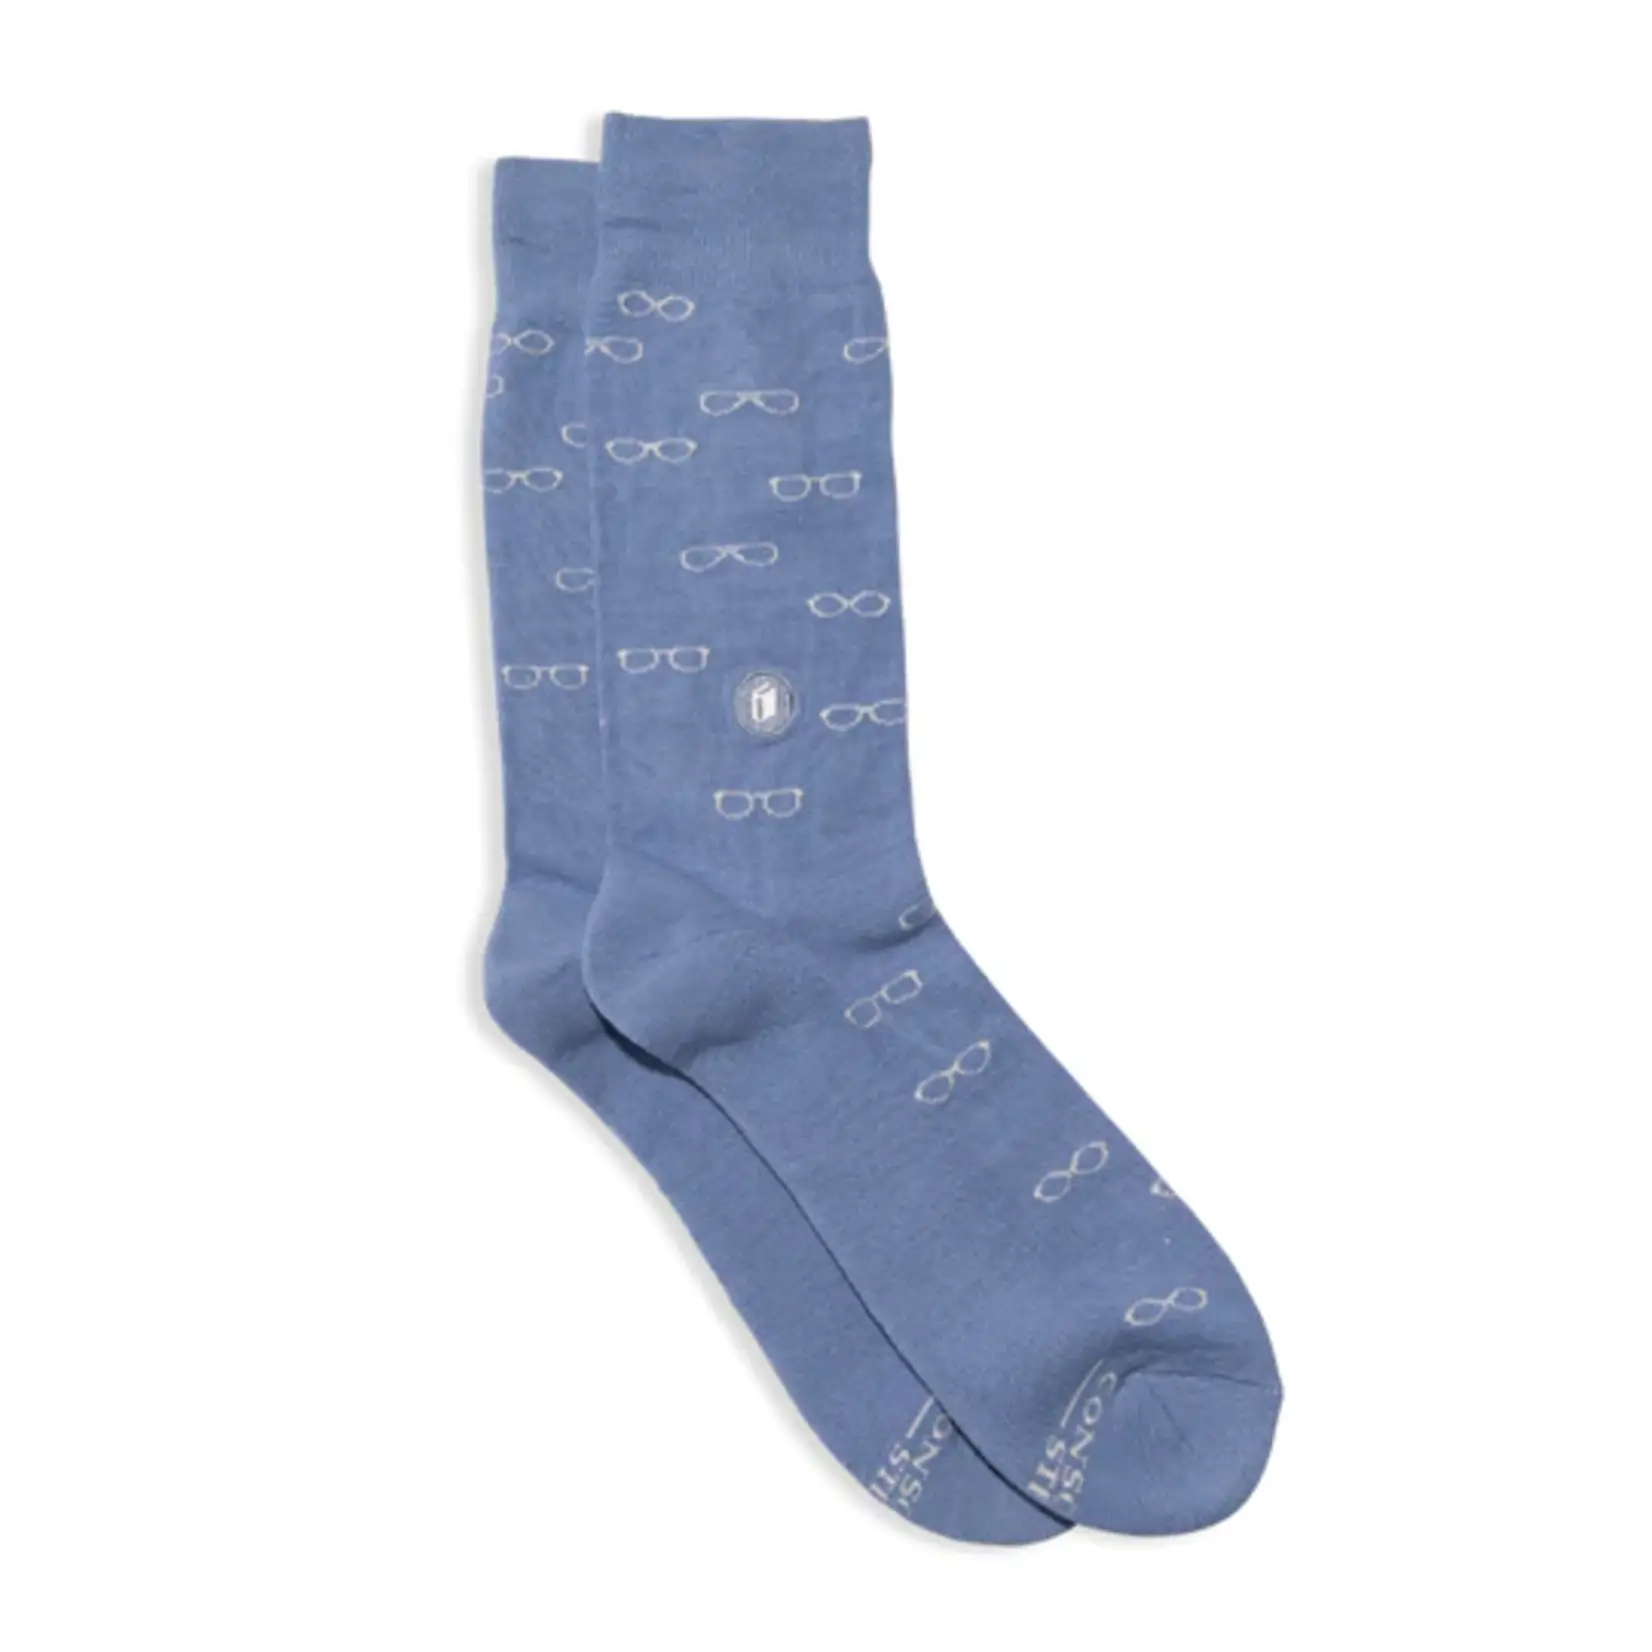 Conscious Step Socks that Give Books | Medium | Blue